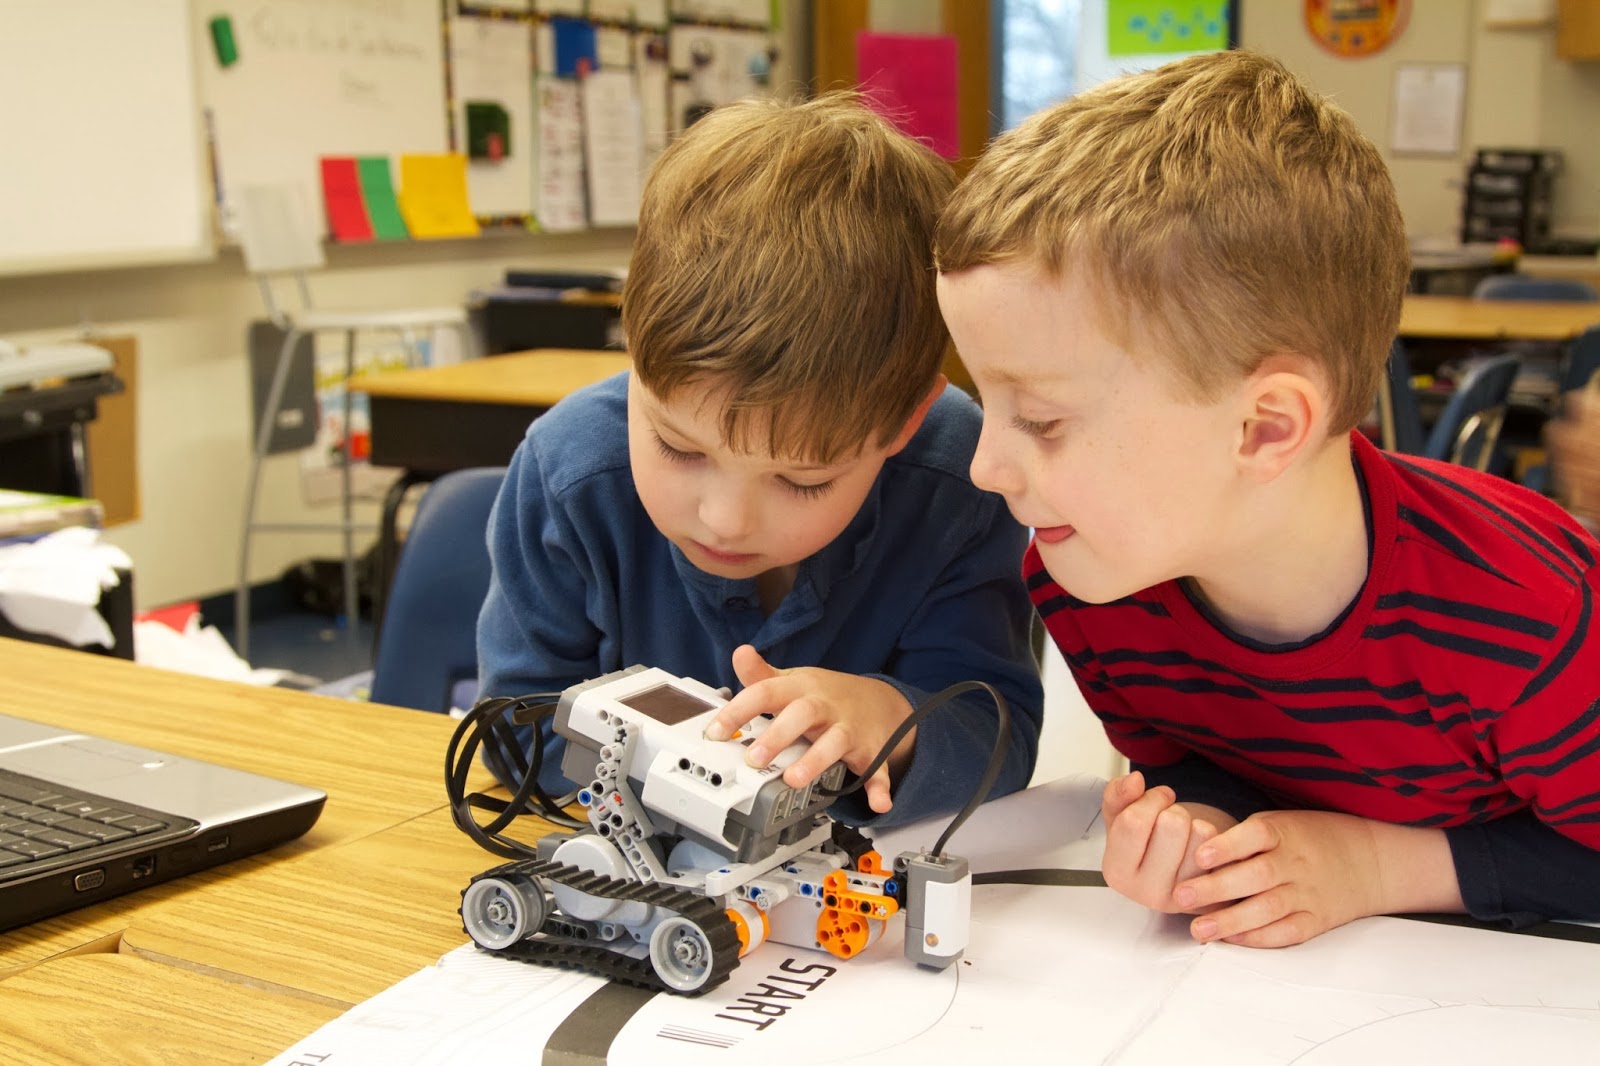 La robótica, una forma de aprendizaje para 1280 estudiantes